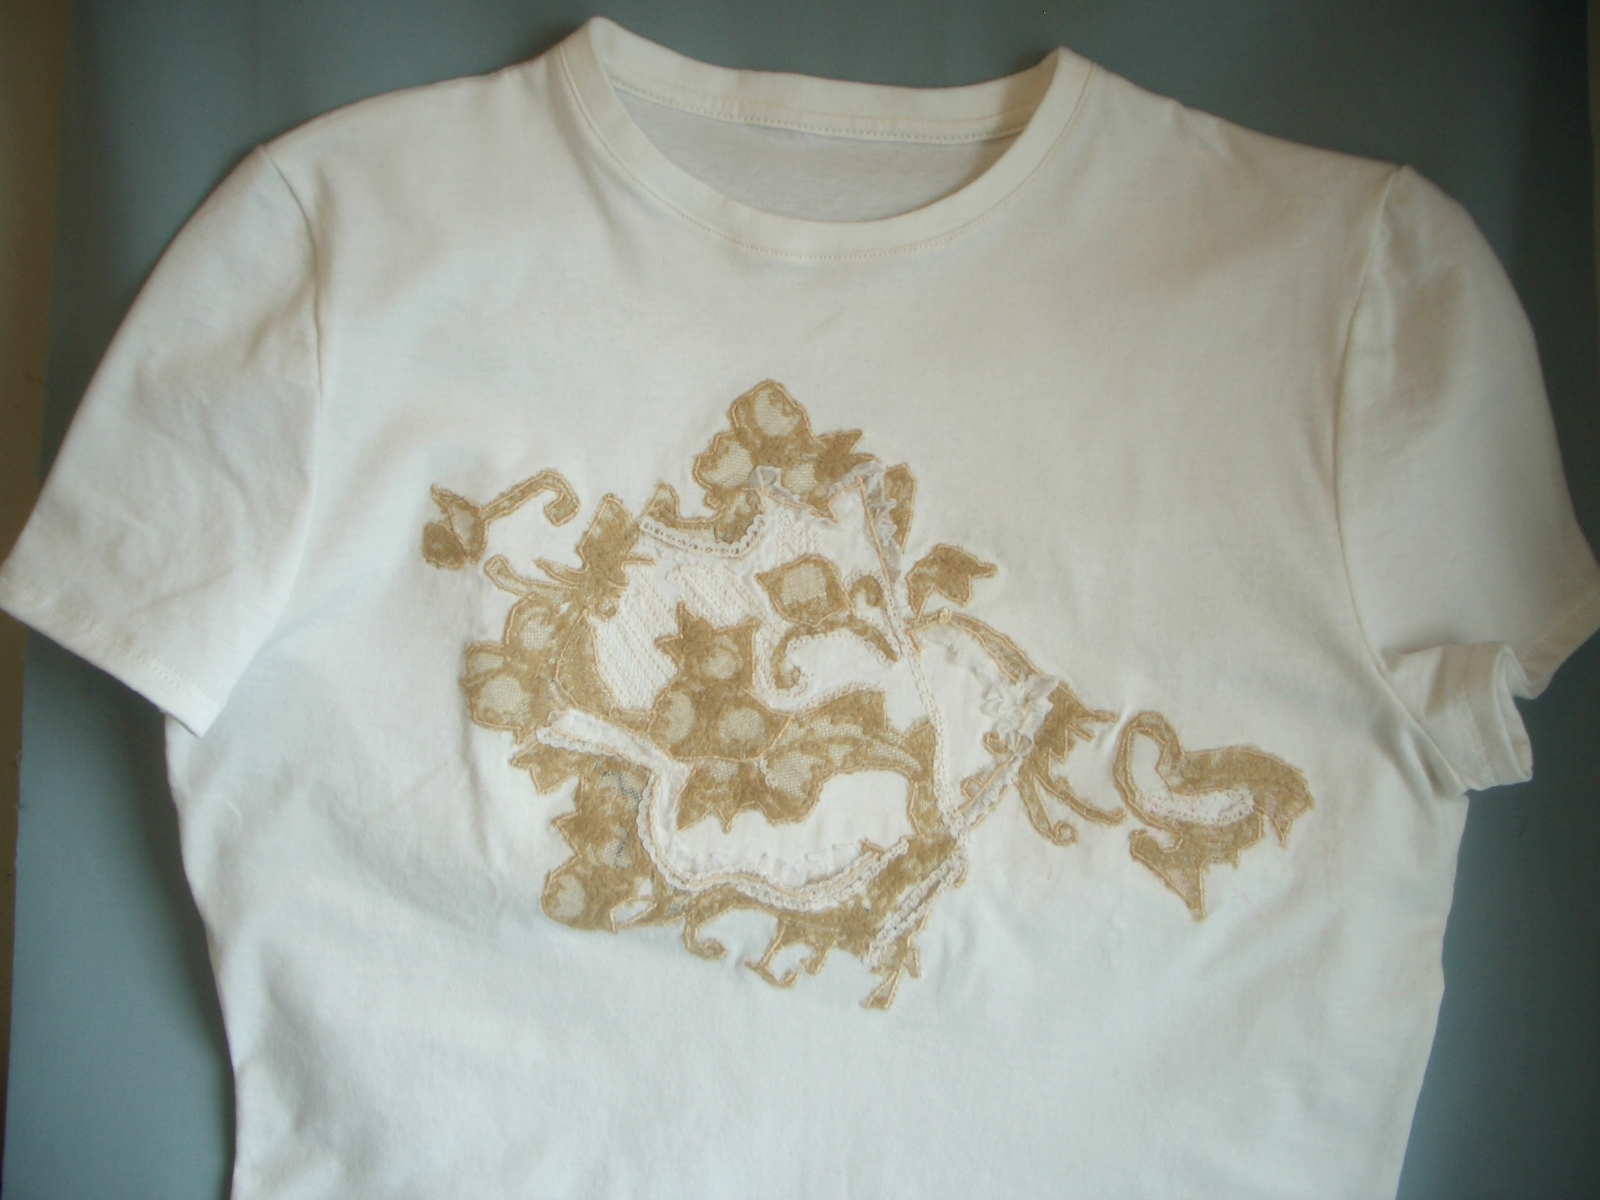 Декор футболки аппликацией с кристаллами Swarovski®